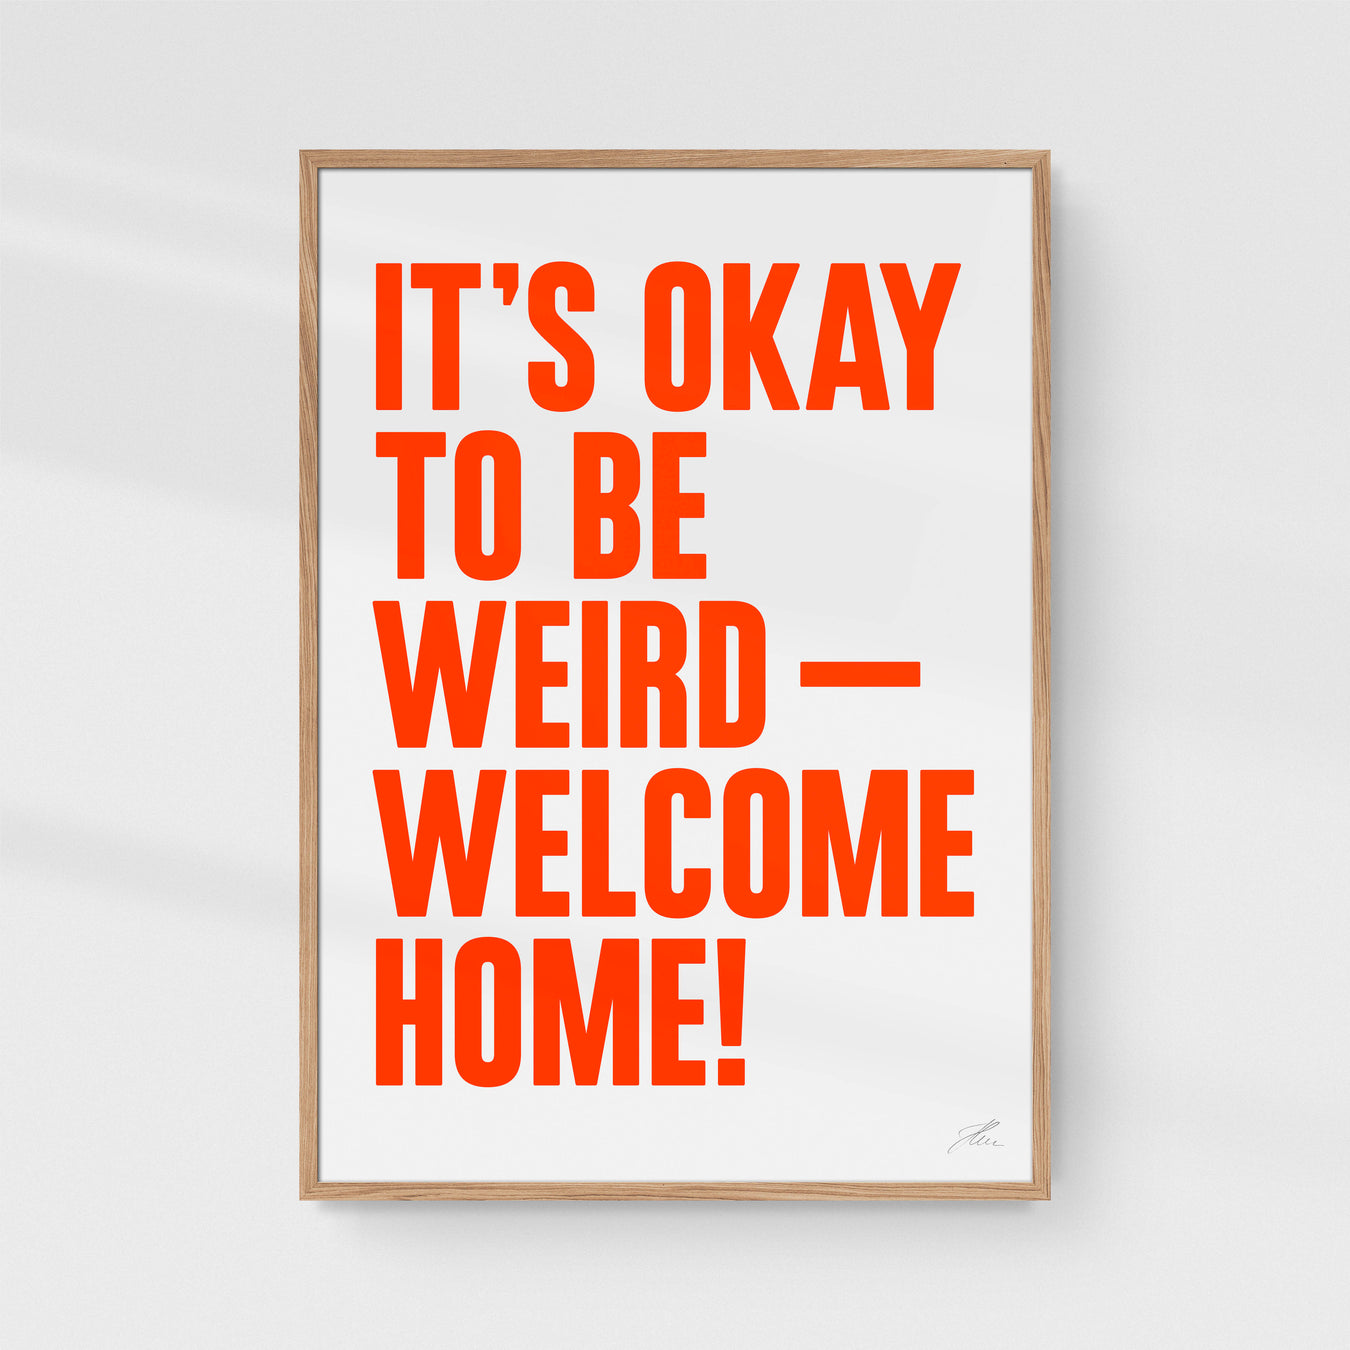 Be weird — Welcome home!